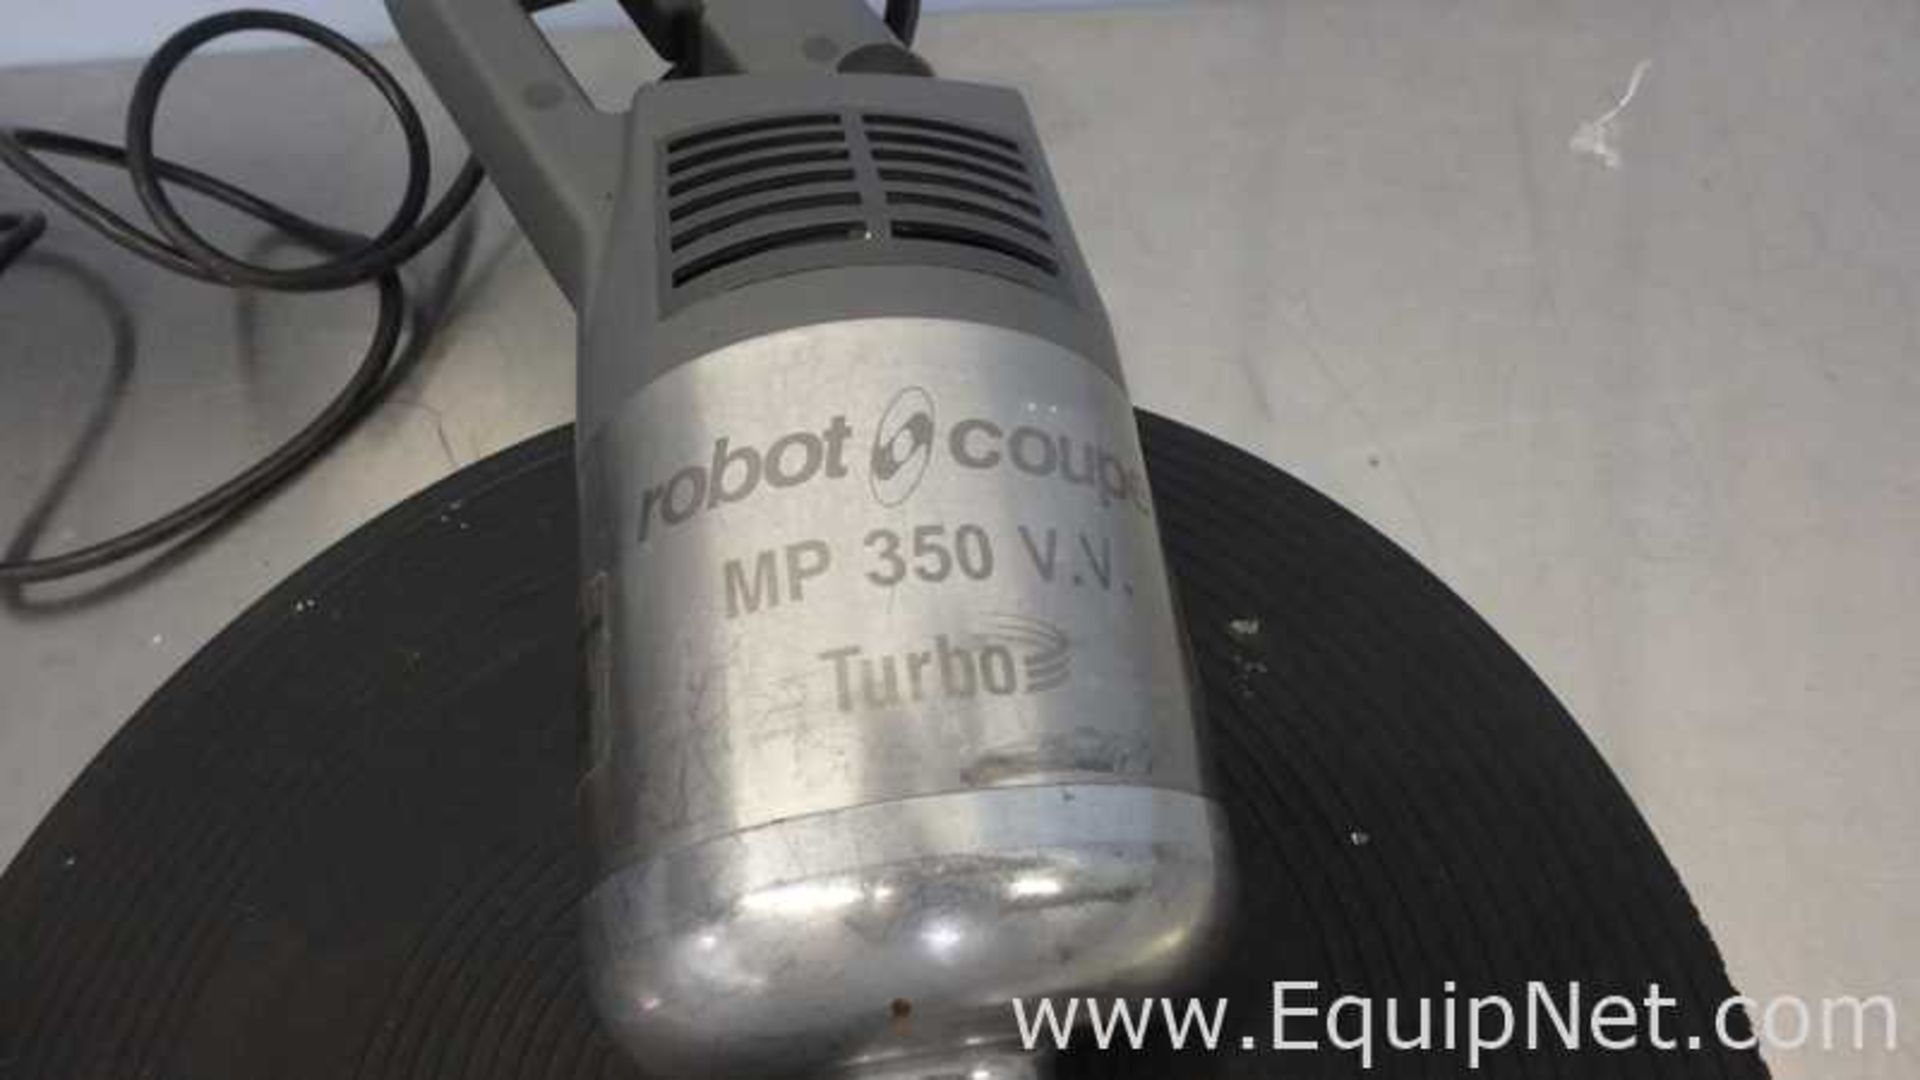 Robot Coupe MP350VV Turbo Immersion Blender - Image 2 of 6